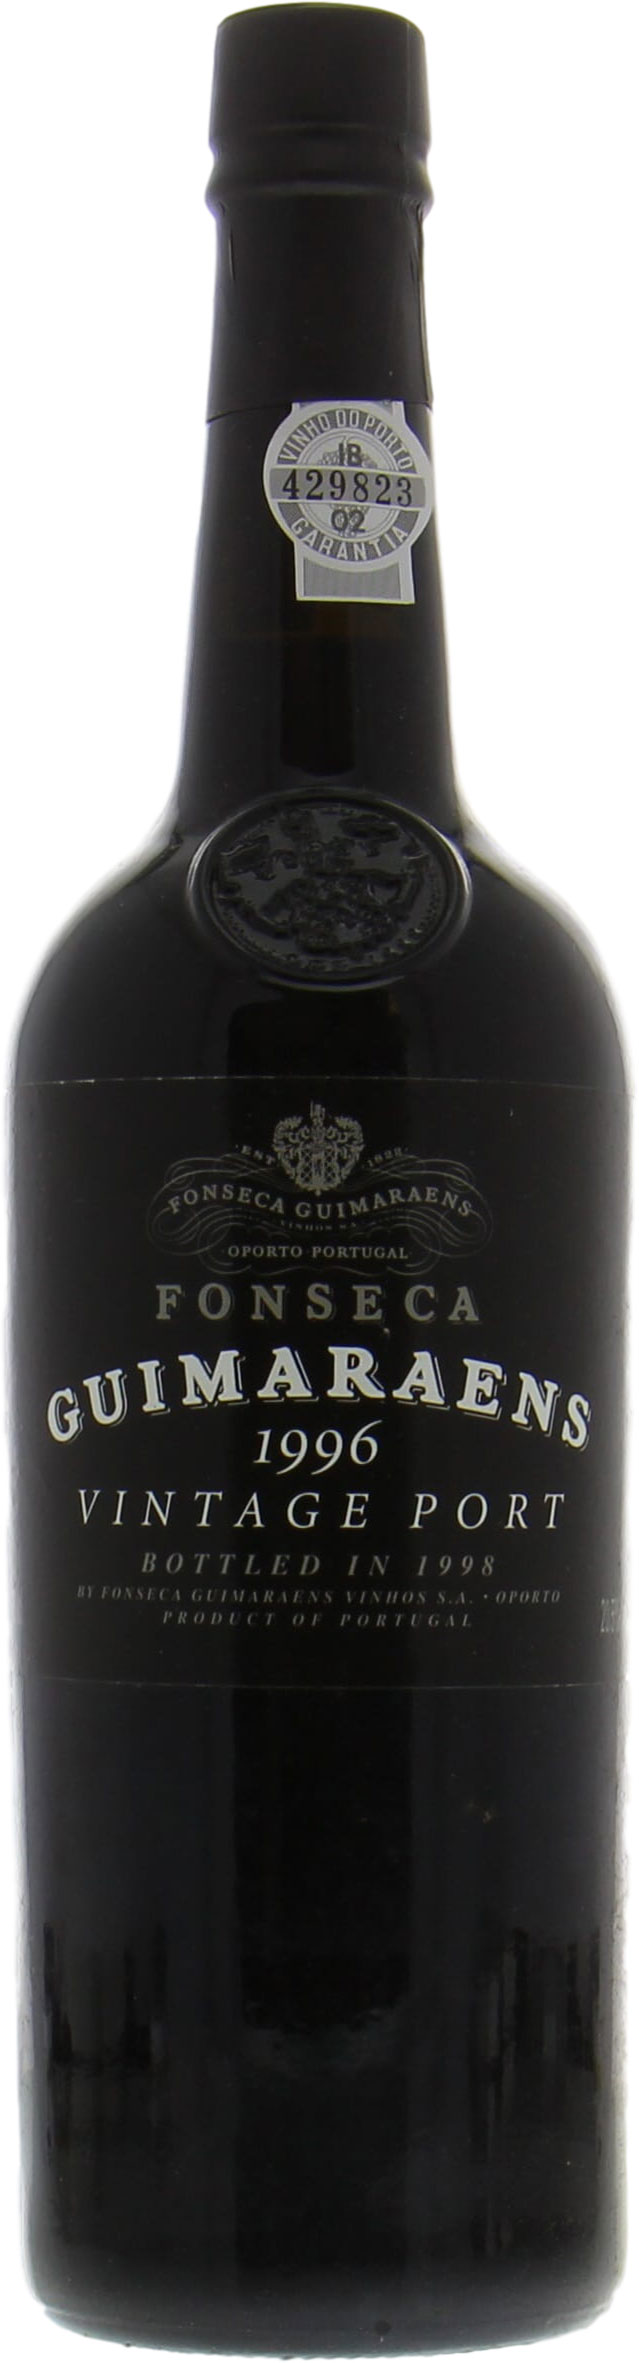 Fonseca - Vintage Port 1996 Perfect